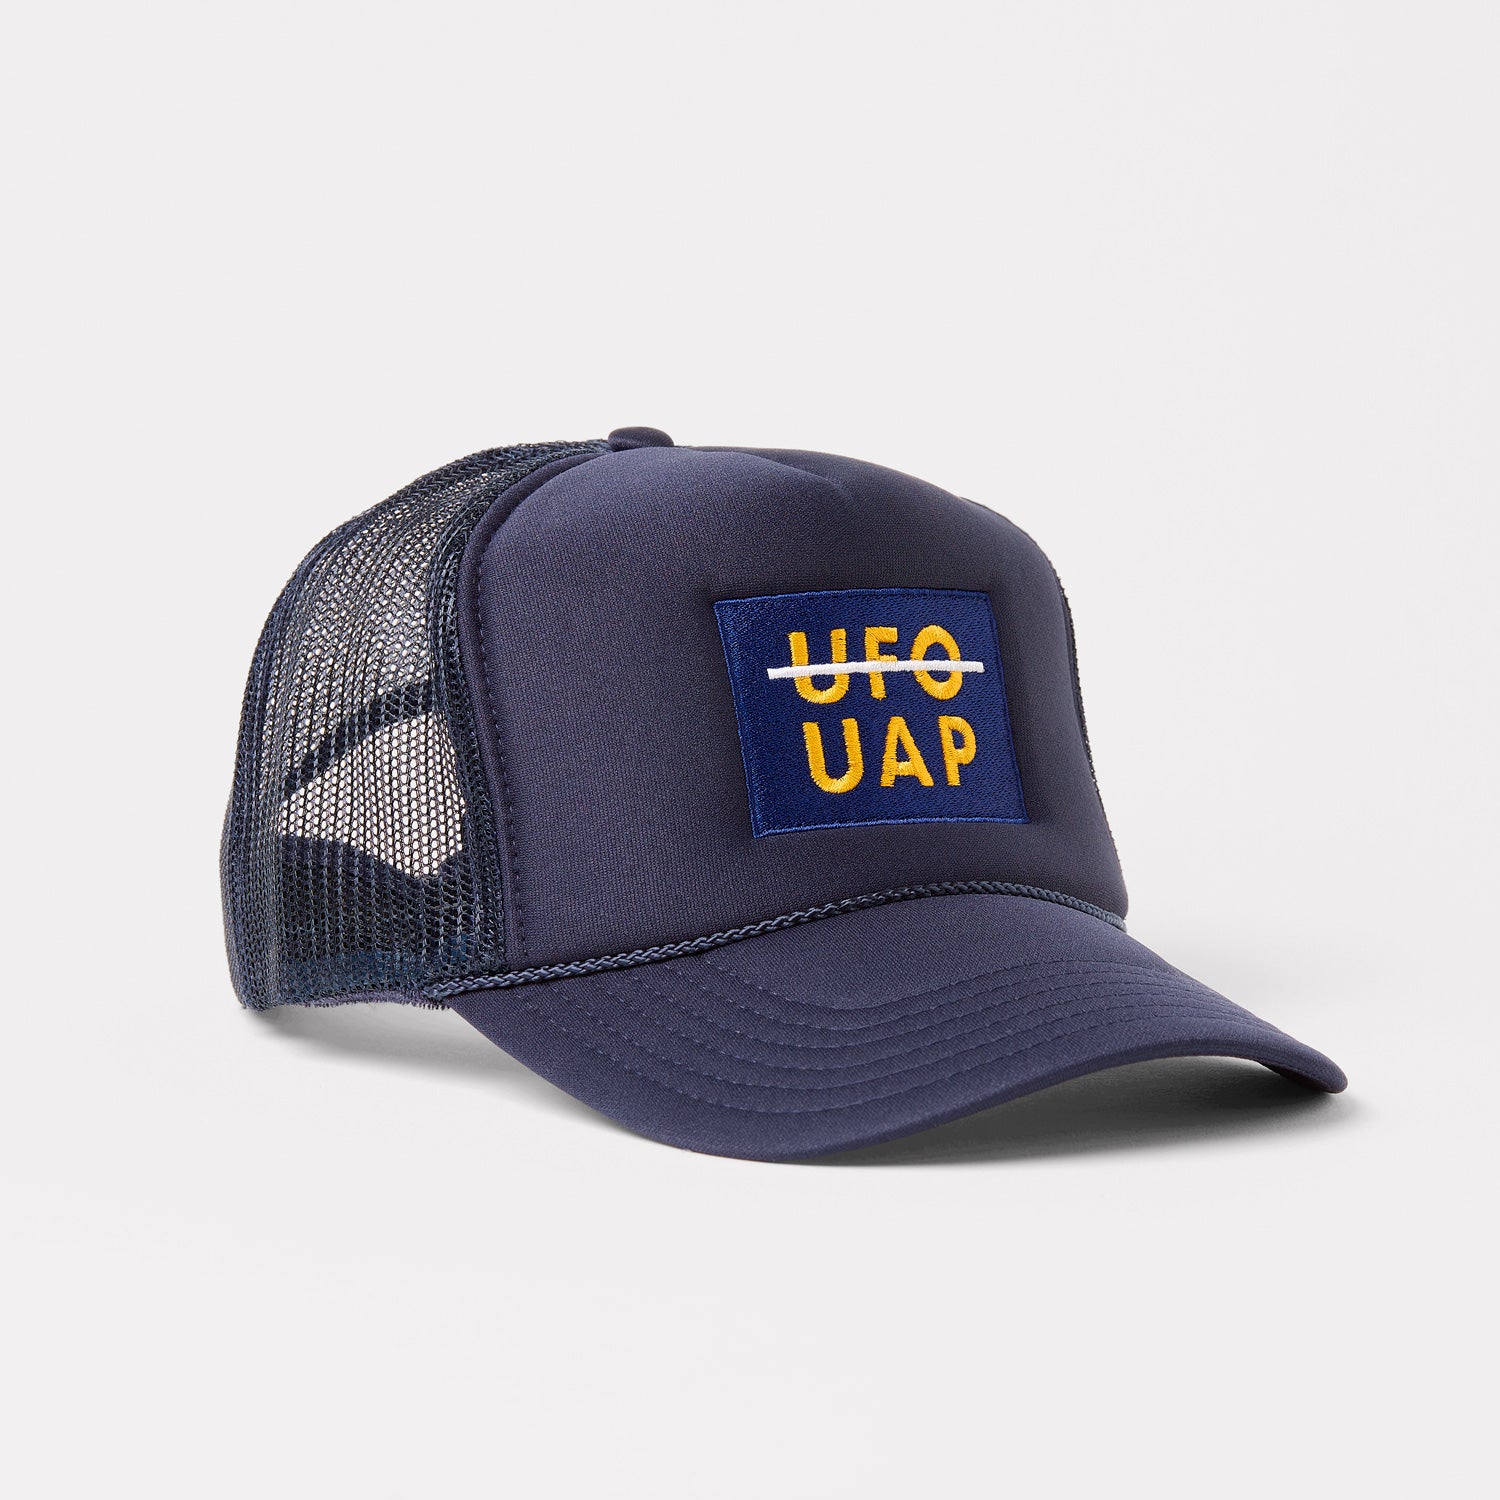 UFO/UAP FEDERAL AGENT HAT